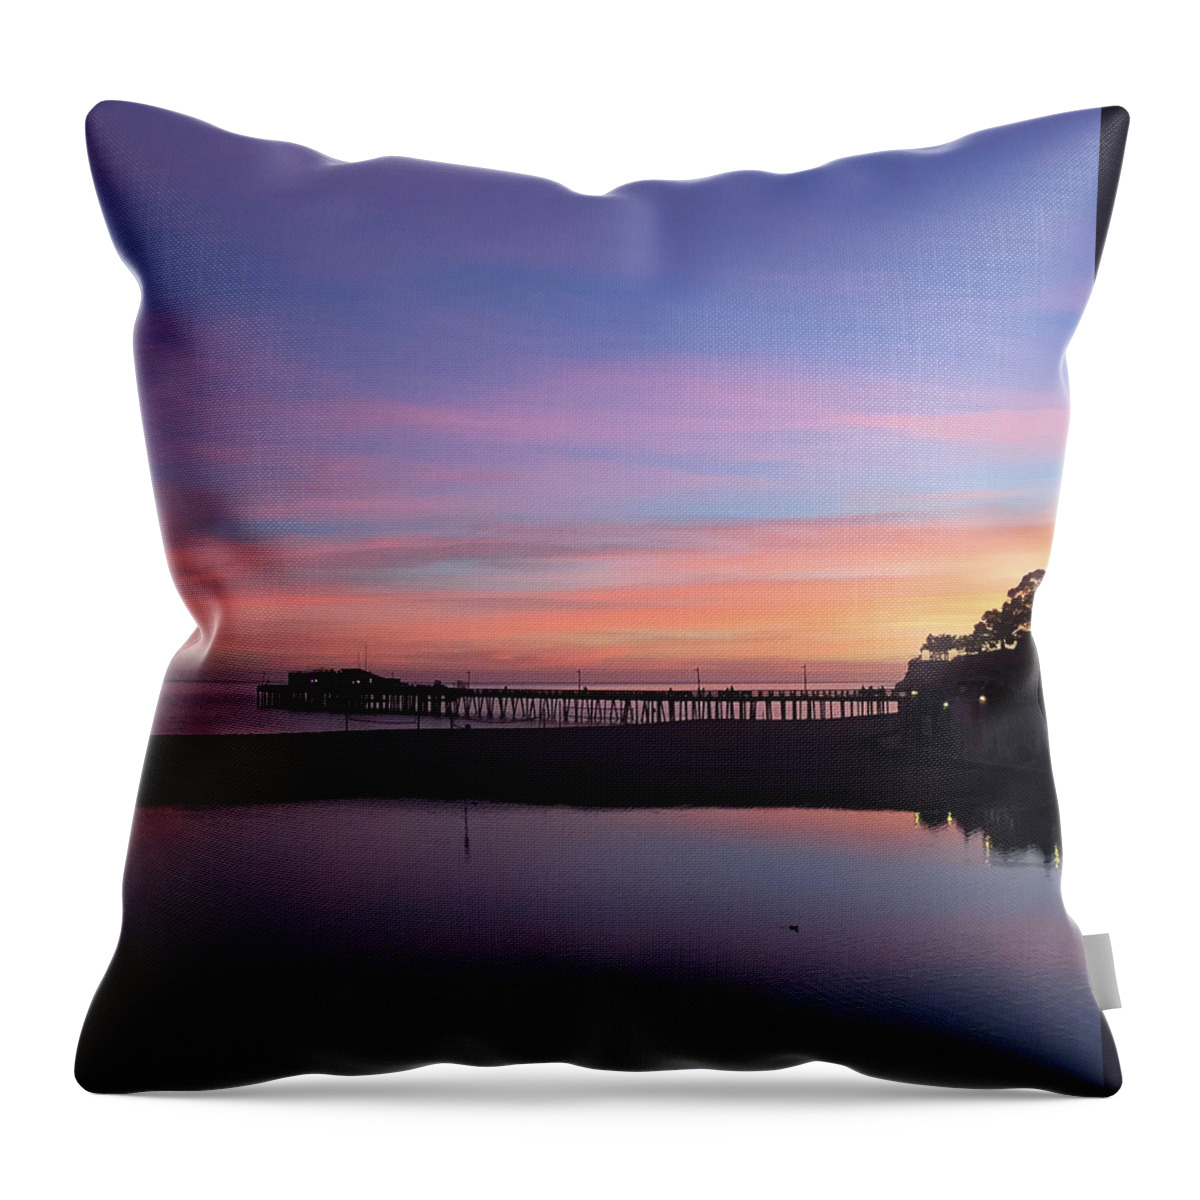 Jennifer Kane Webb Throw Pillow featuring the photograph Twilight Skies From Fogbank by Jennifer Kane Webb